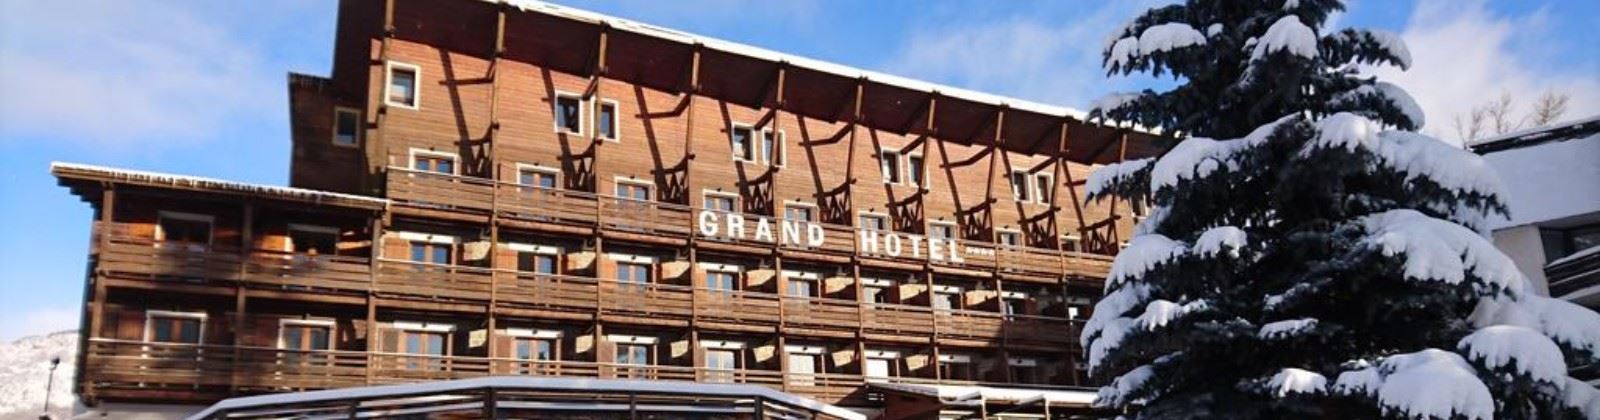 grand hotel spa nuxe serre chevalier olevene hotel restaurant convention reunion 